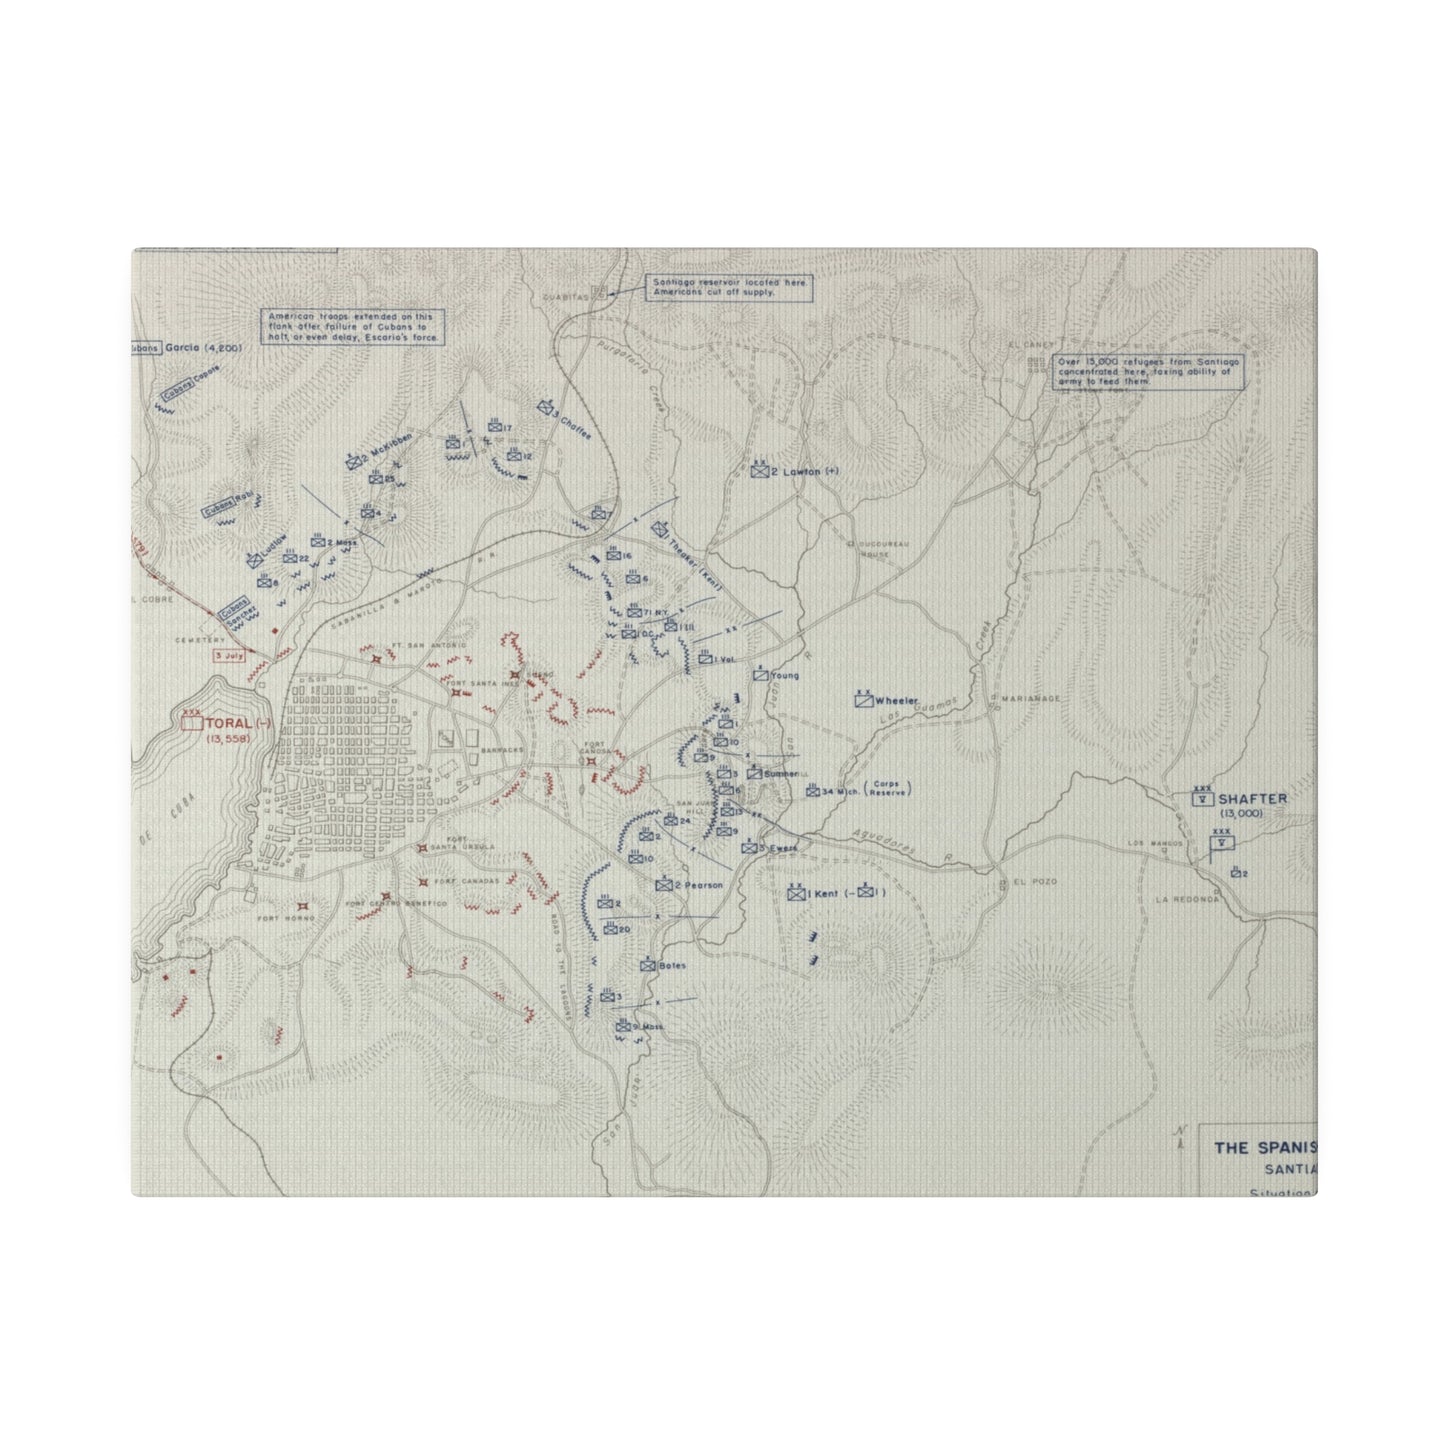 Spanish-American War, Santiago Campaign, Surrender of Santiago 14 July 1898